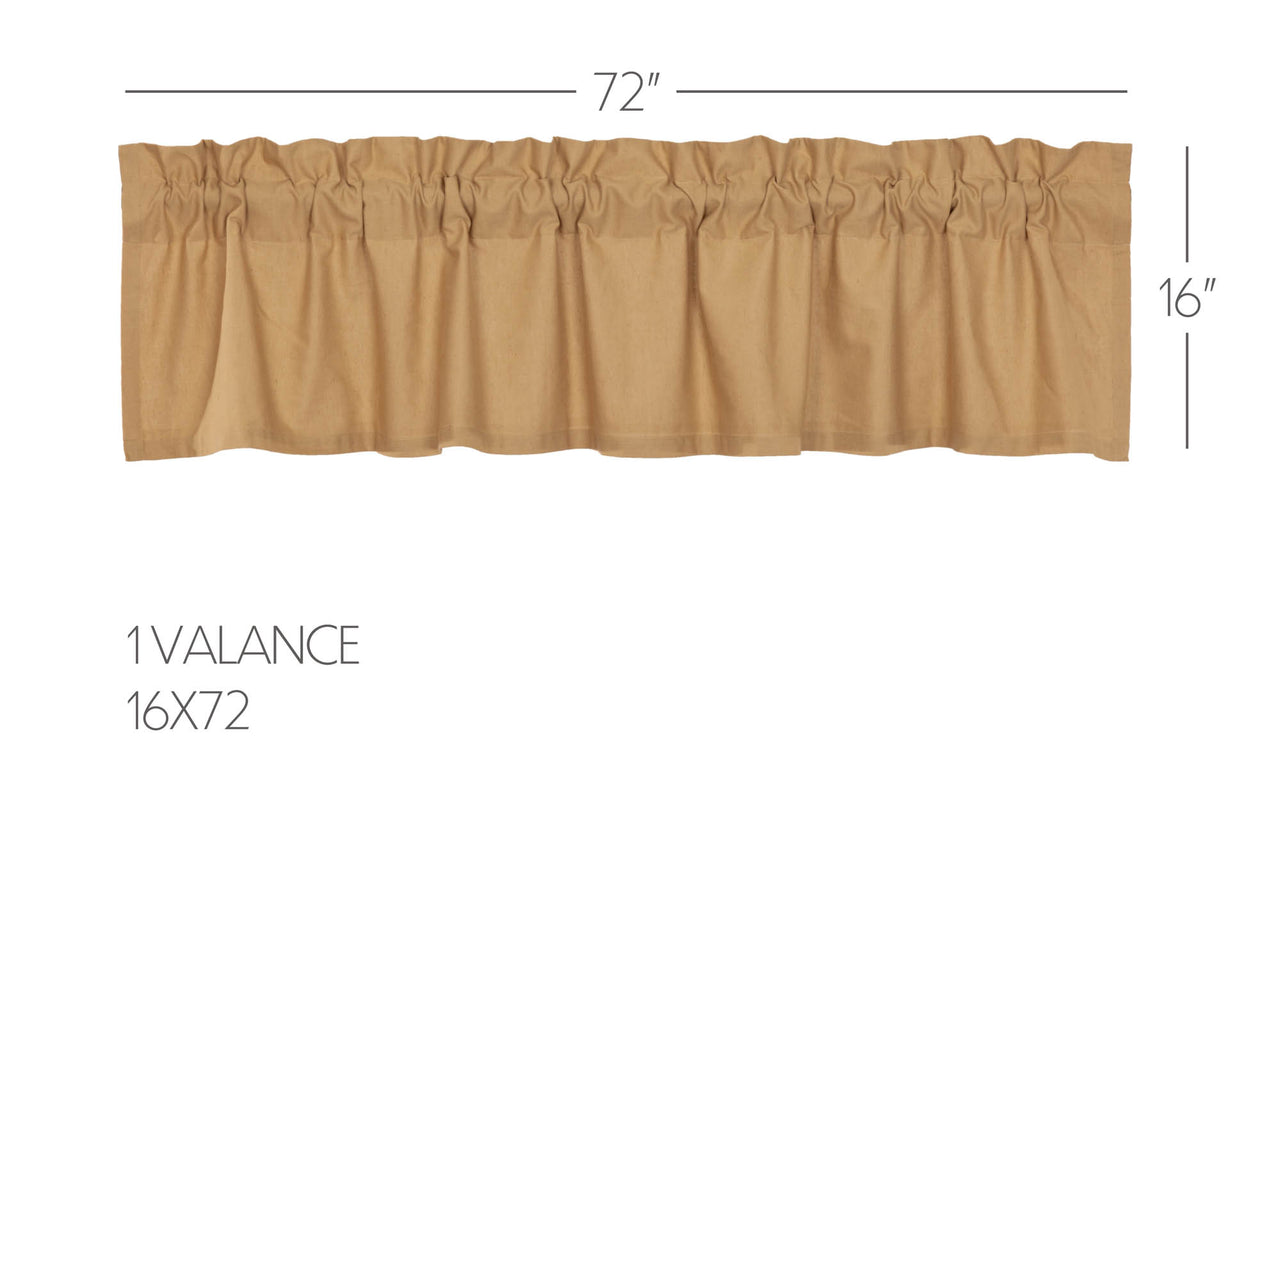 Simple Life Flax Khaki Valance Curtain 16x72 VHC Brands